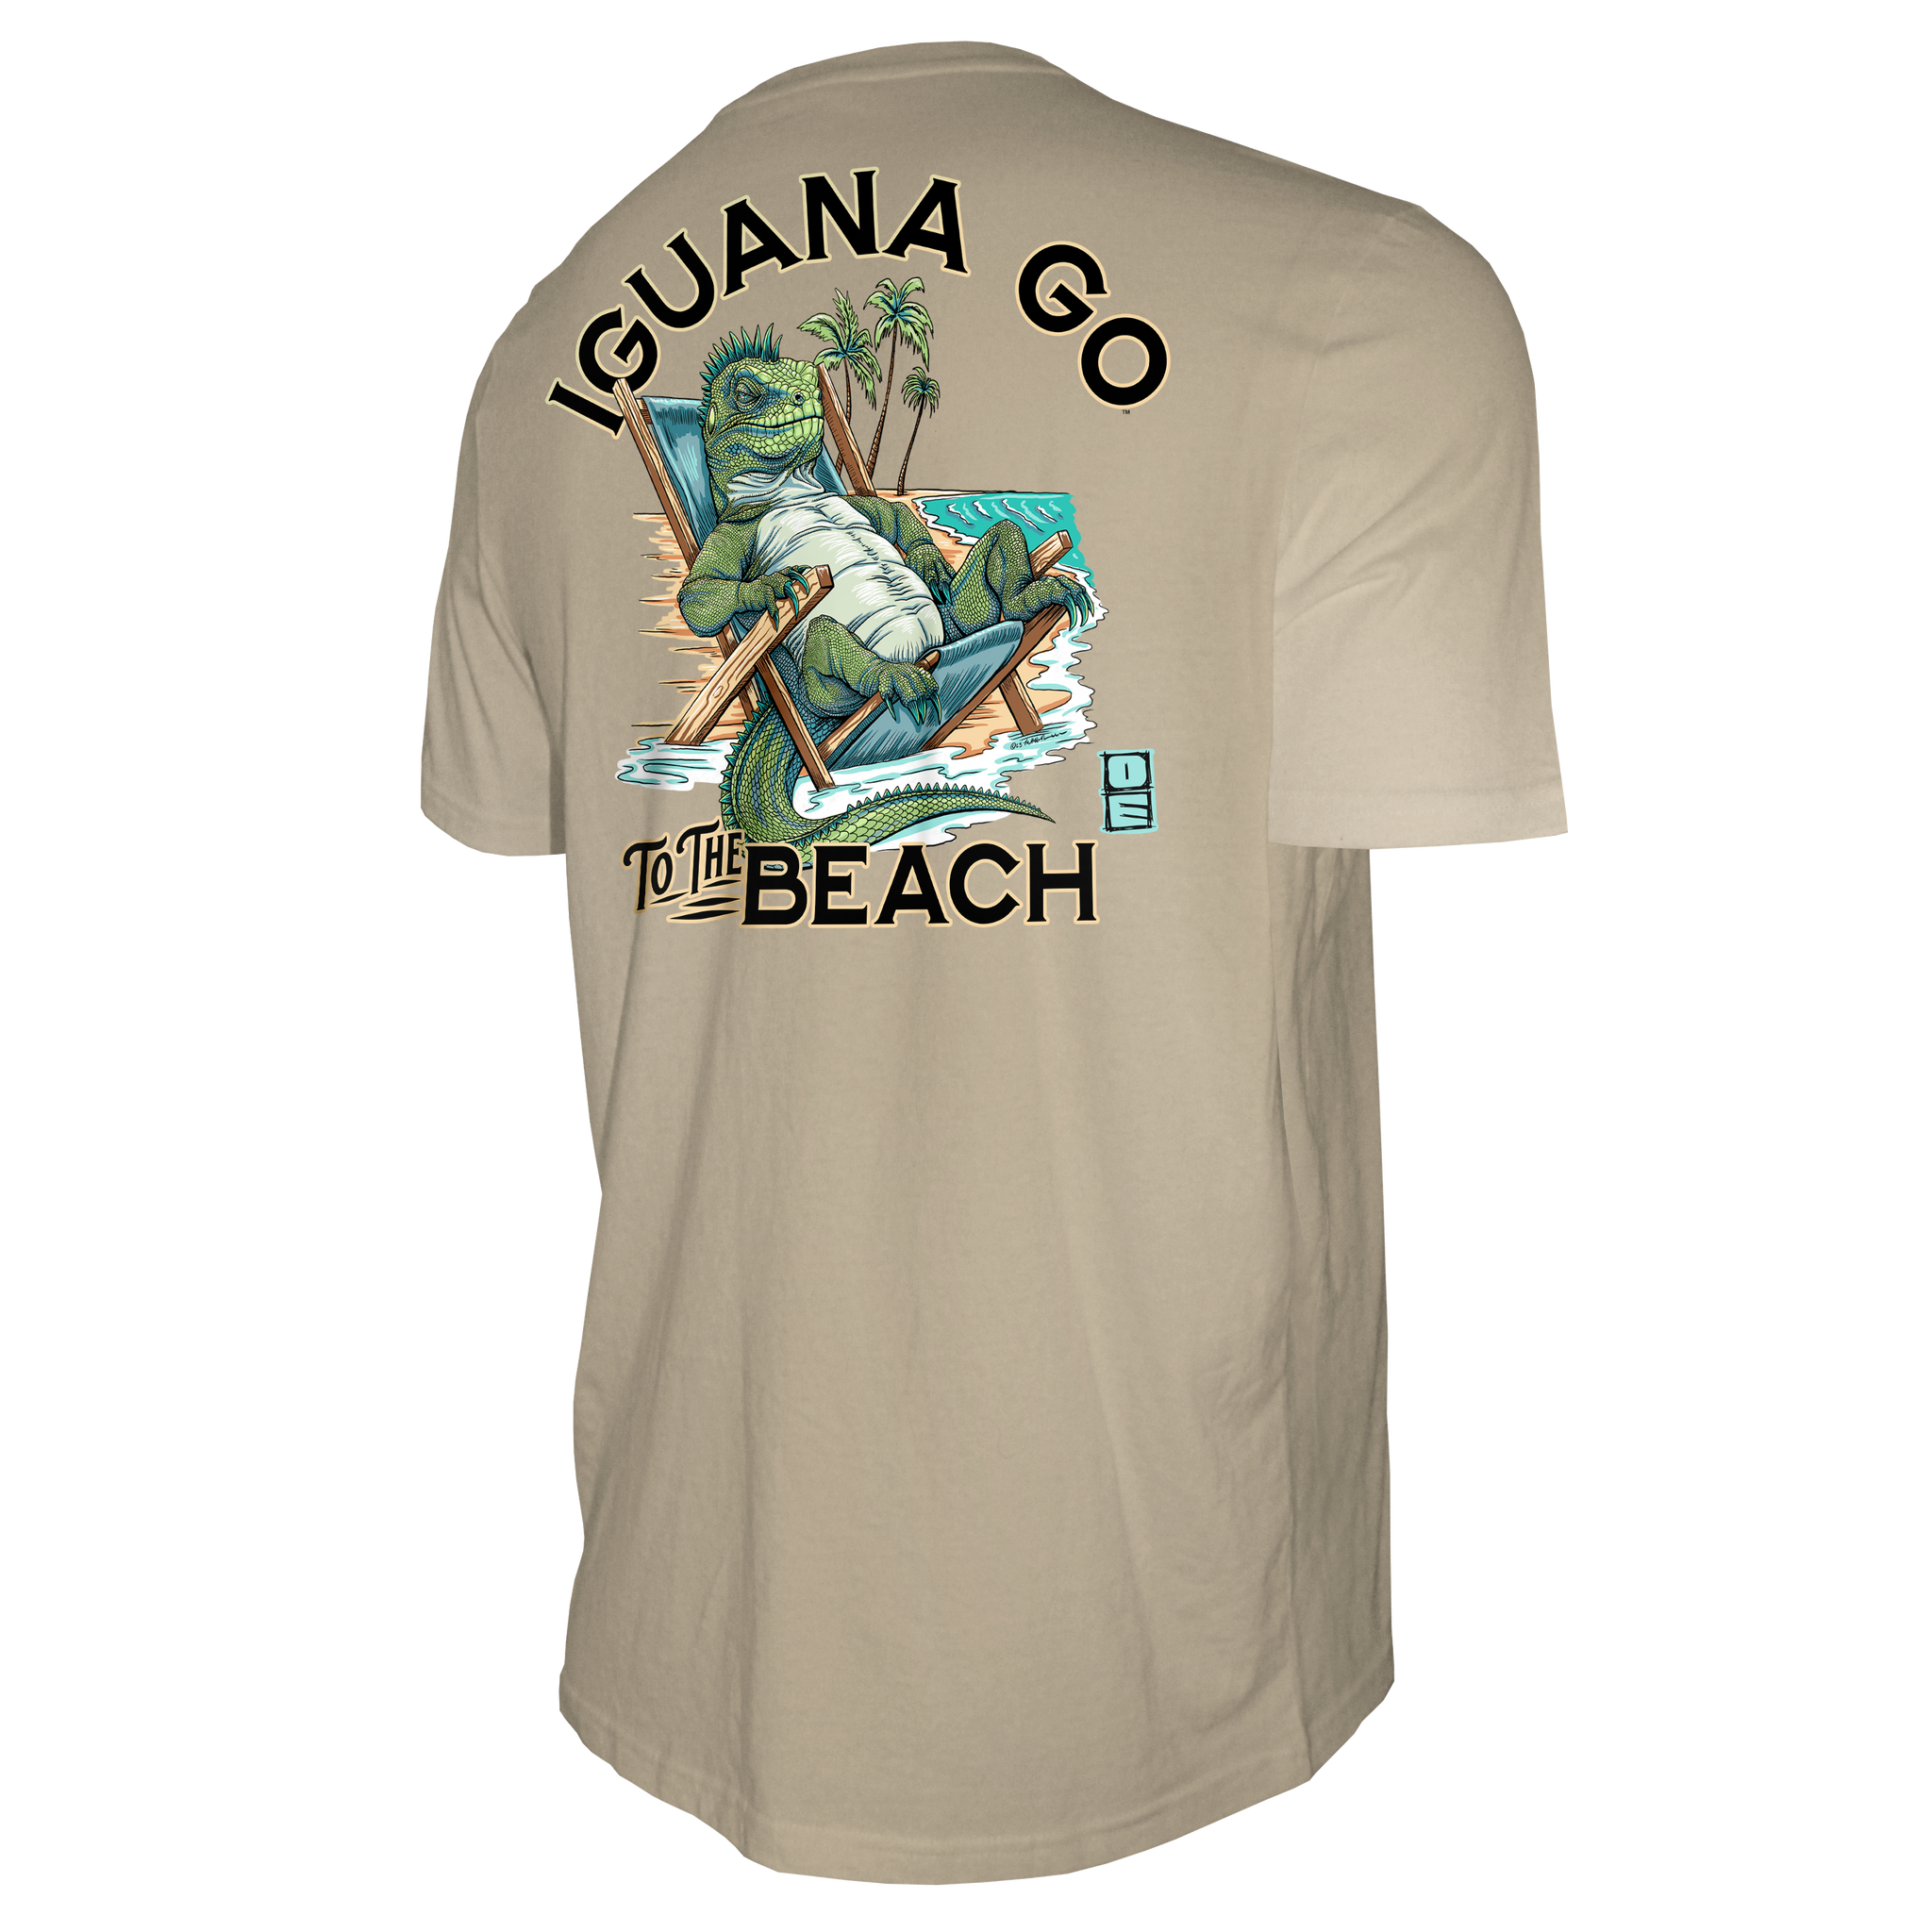 Outdoor Endeavors Attitude- American Made Tee - Iguana Go to the Beach